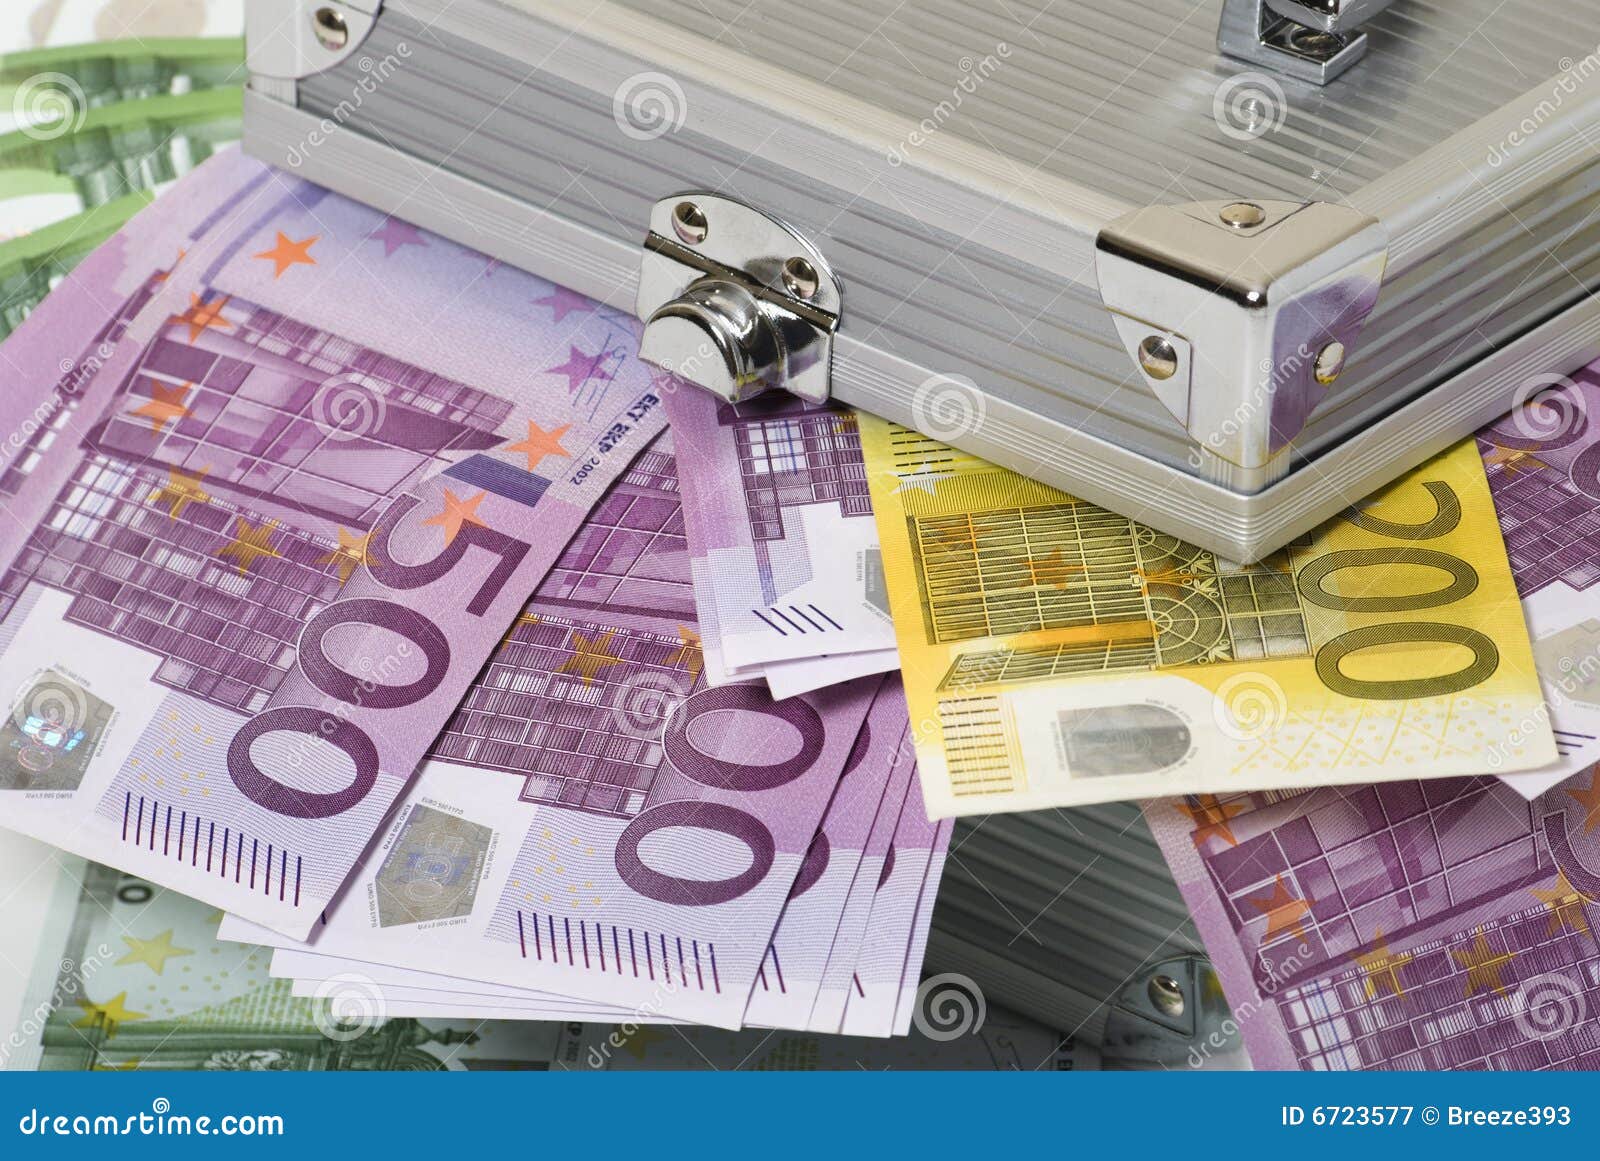 Банки рф евро. Евро деньги в банке. Деньги в коробке. Лента вложена евро. Евро короб.